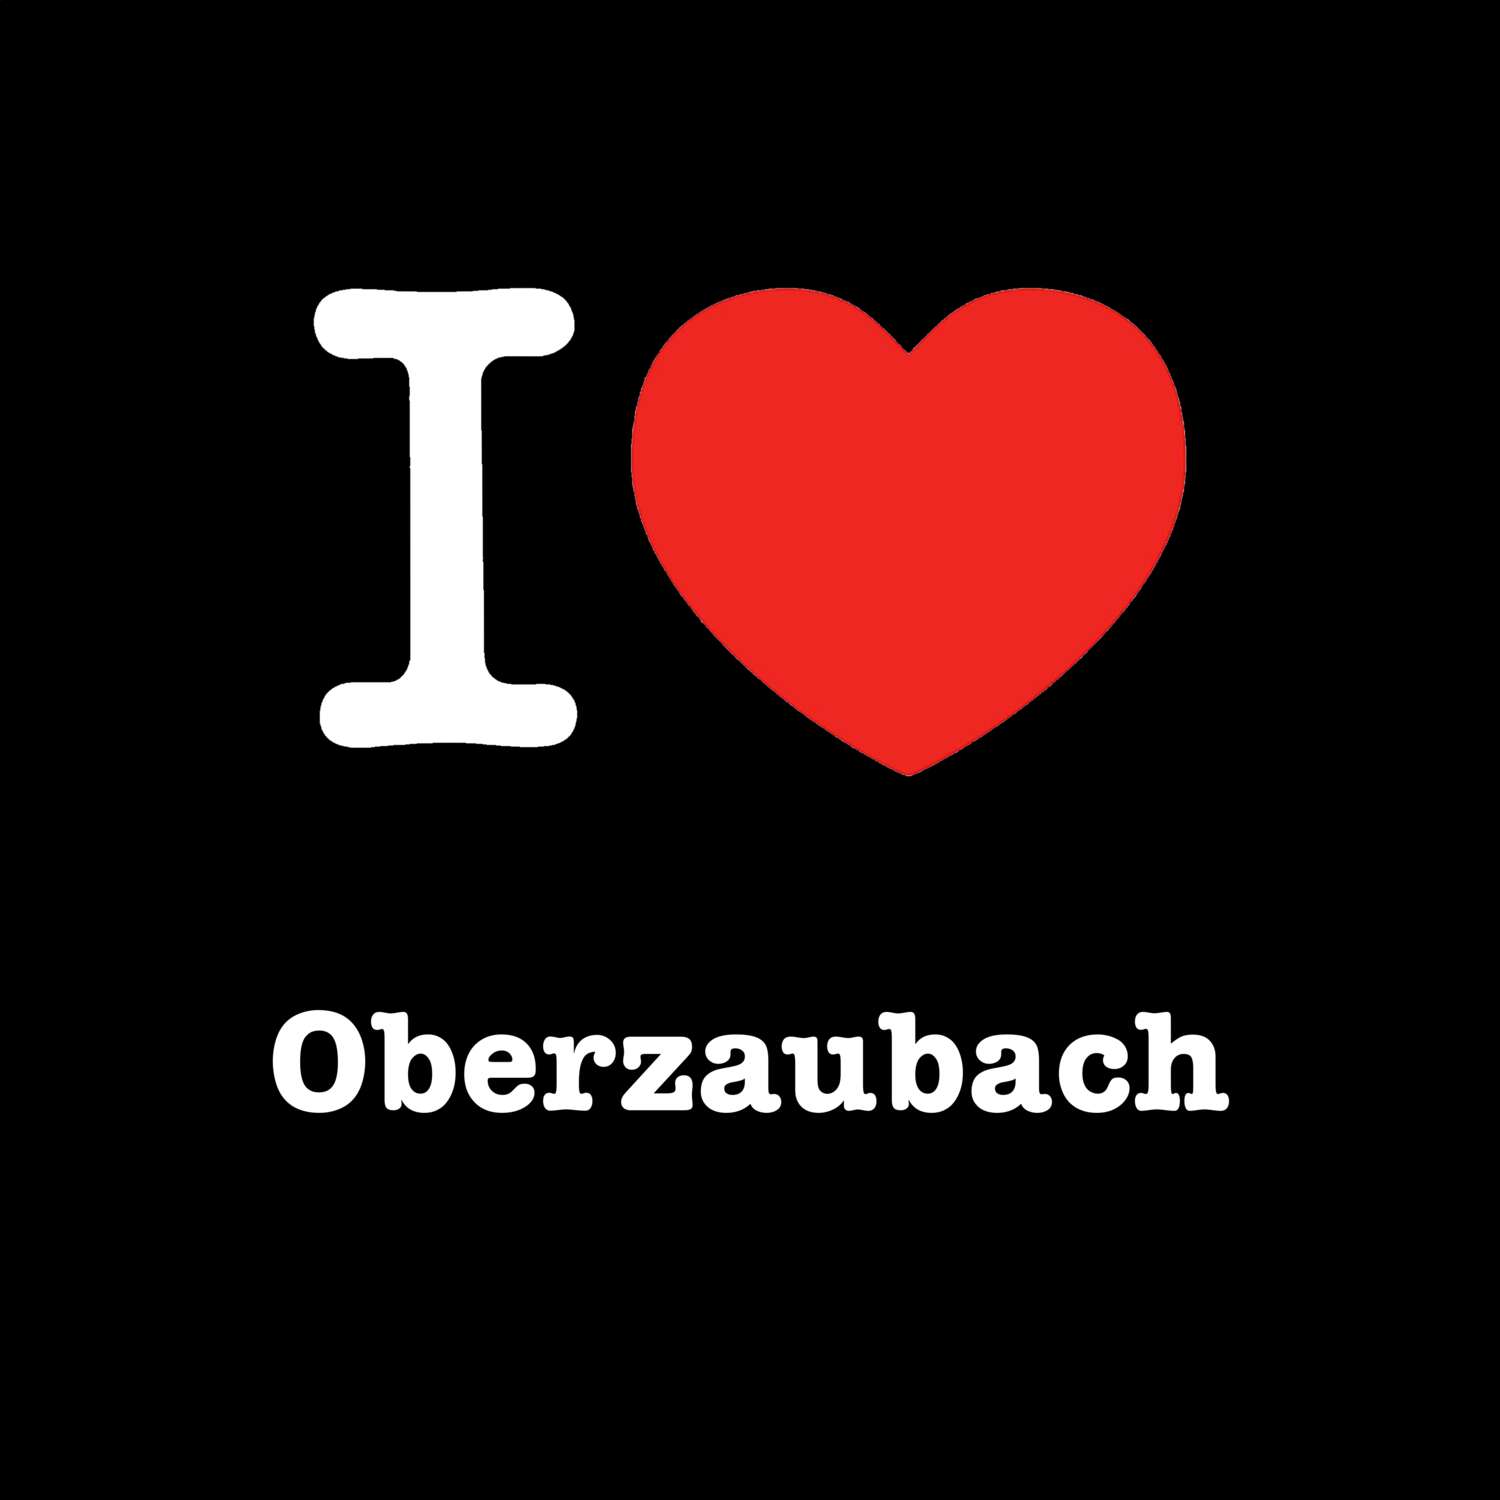 Oberzaubach T-Shirt »I love«